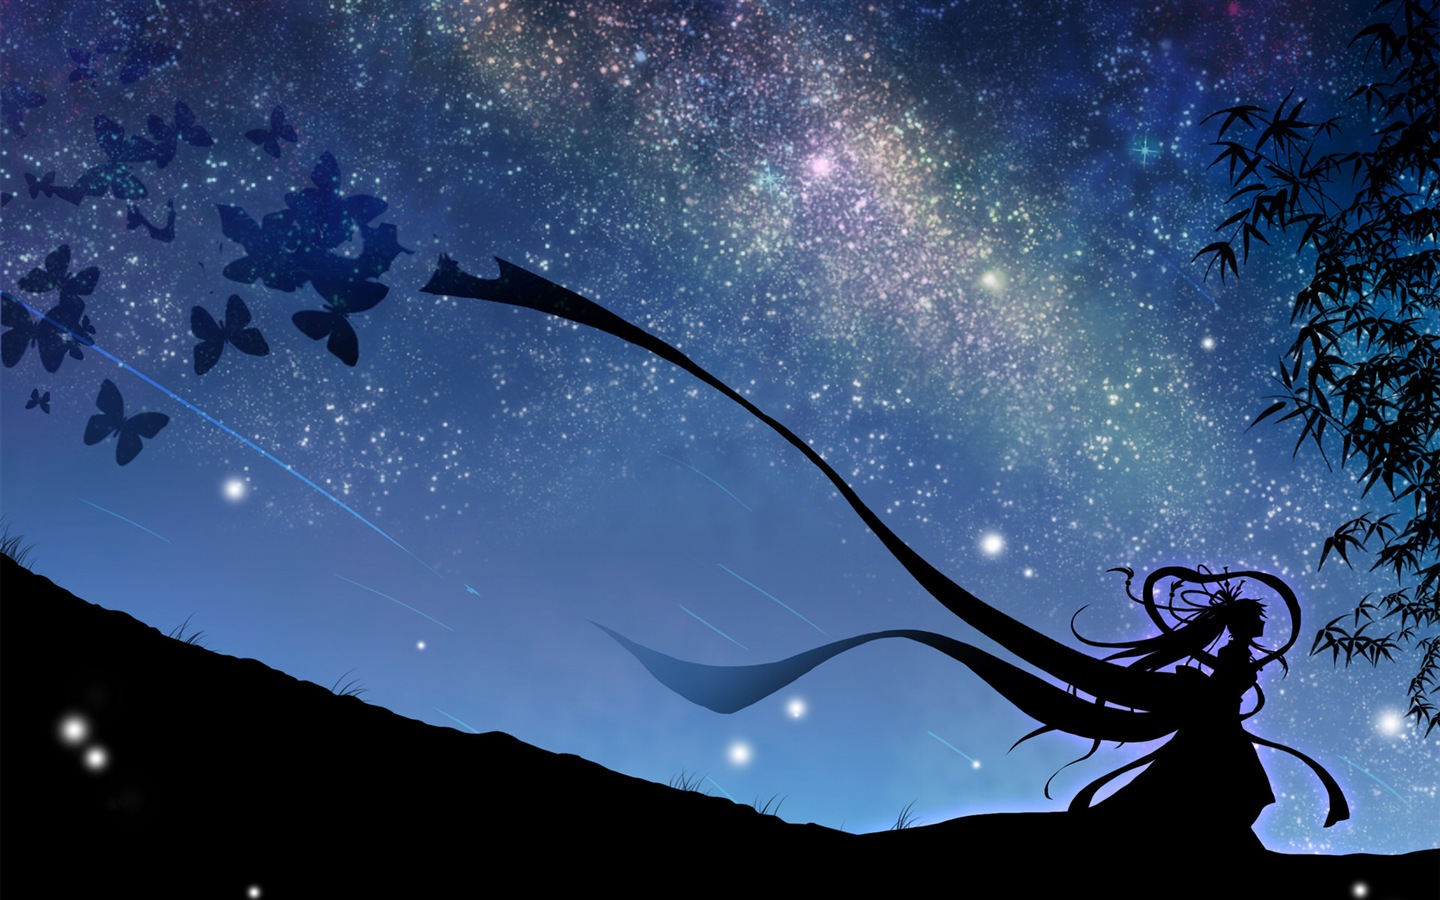 Firefly Summer beautiful anime wallpaper #8 - 1440x900